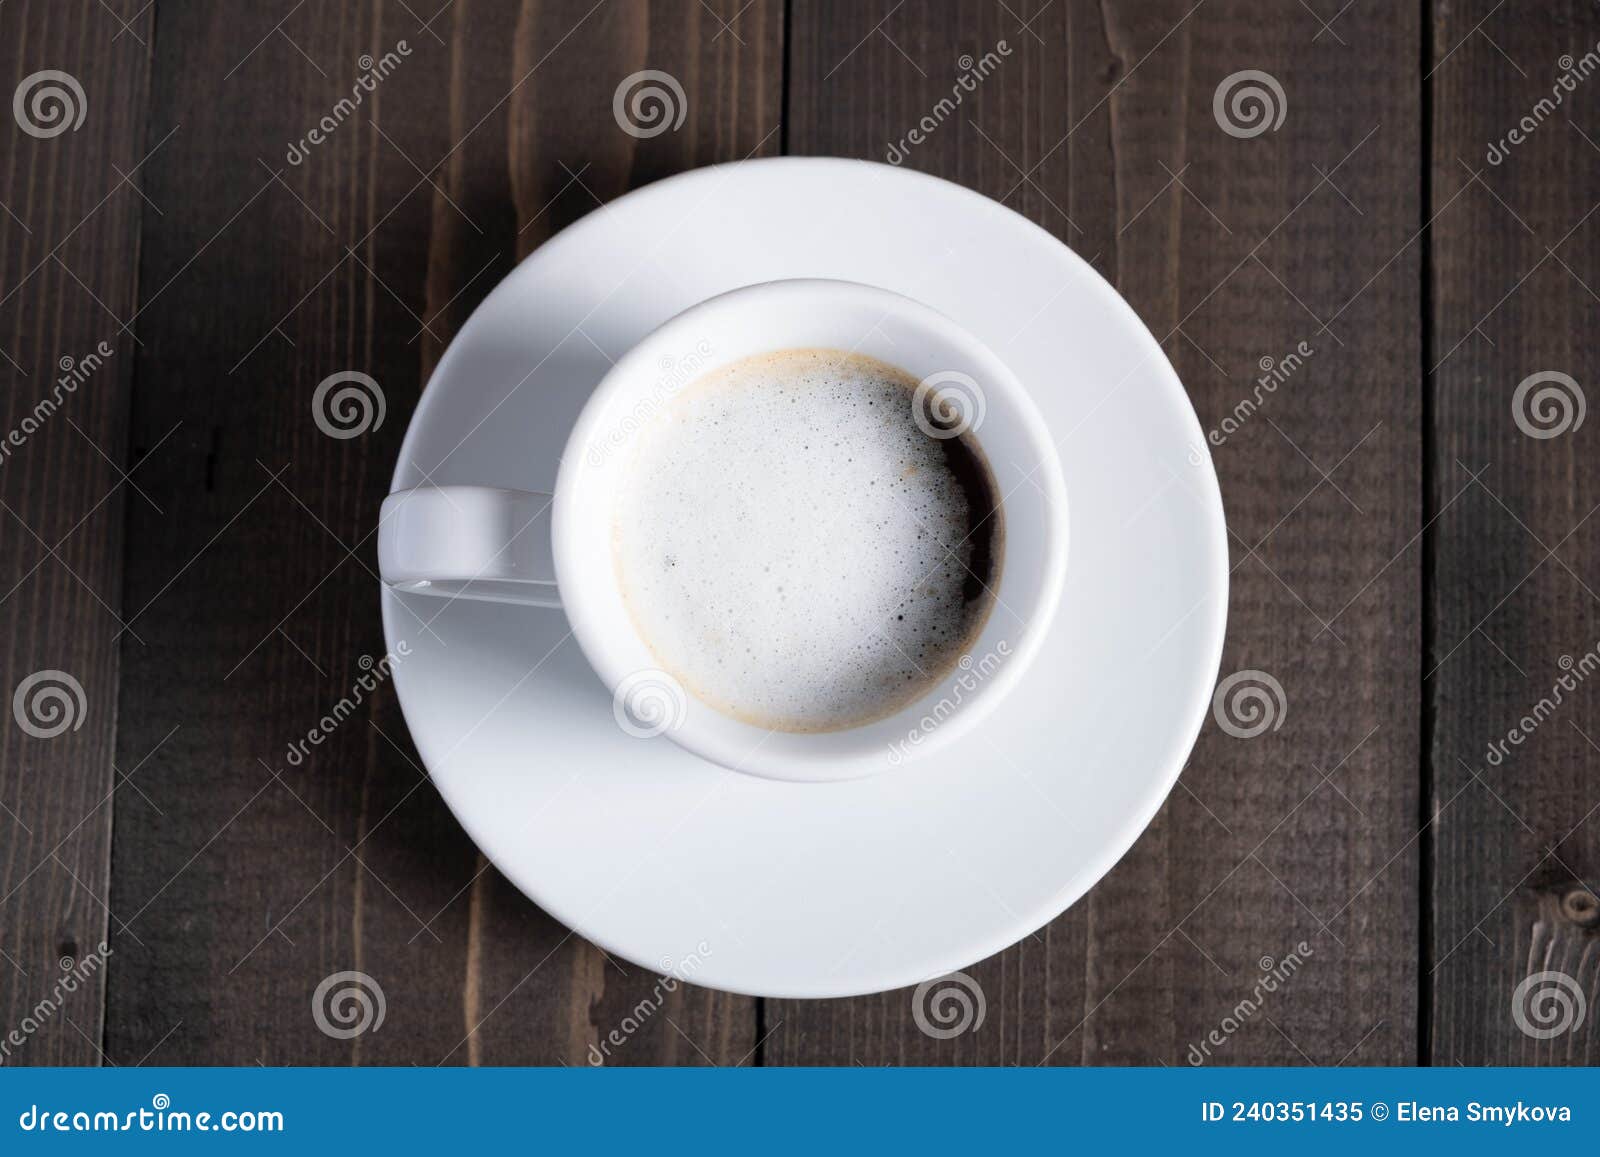 cafe espresso macchiato layered coffee in a see through white glass coffee cup